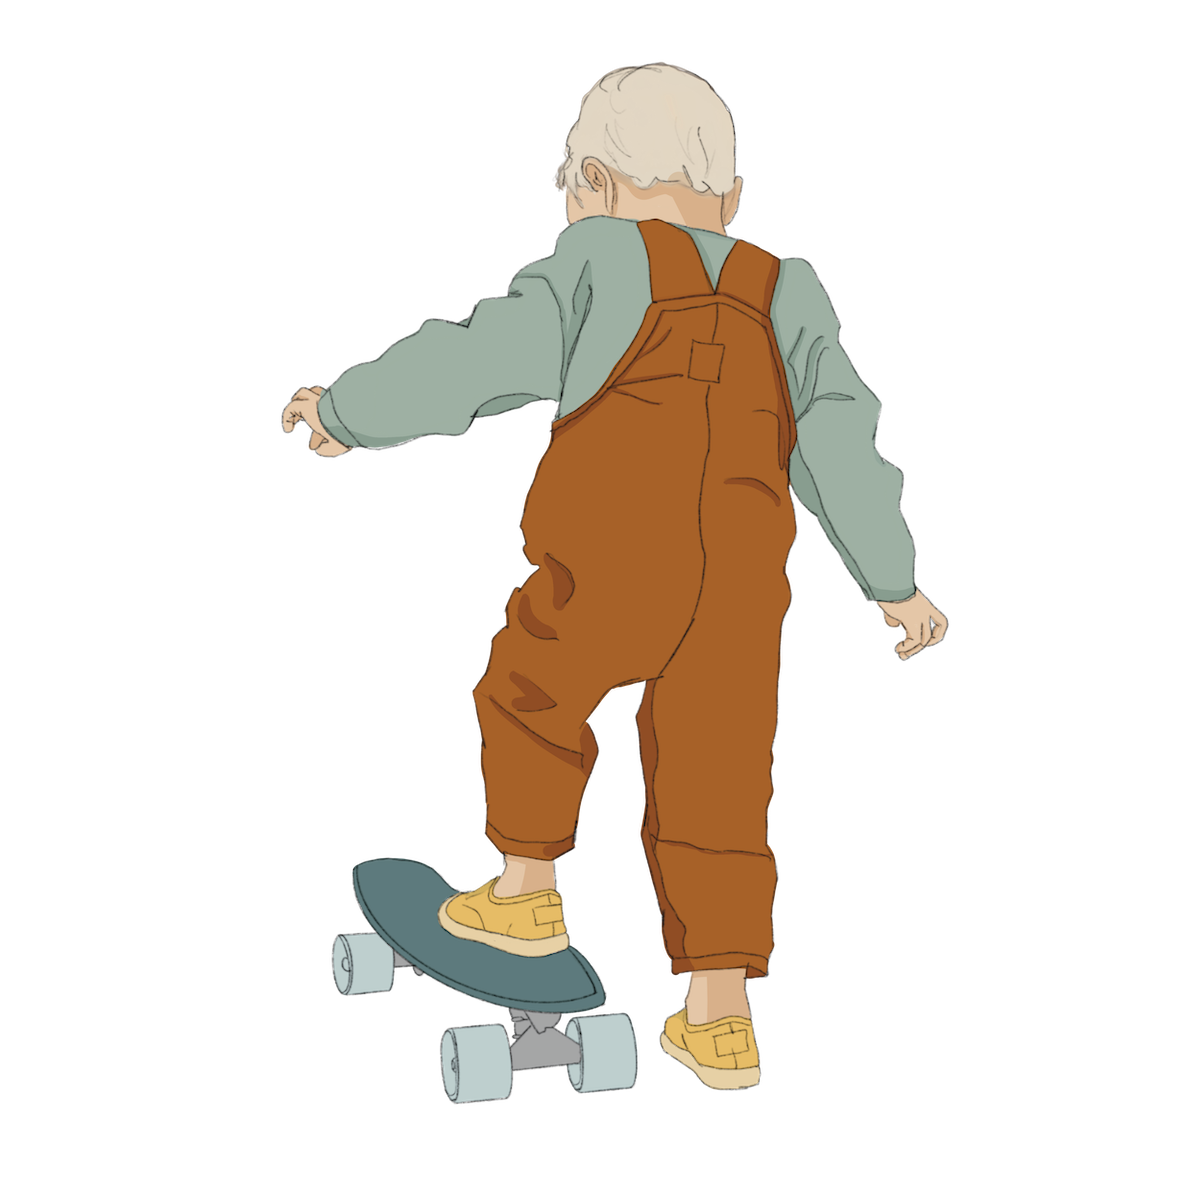 child on skateboard